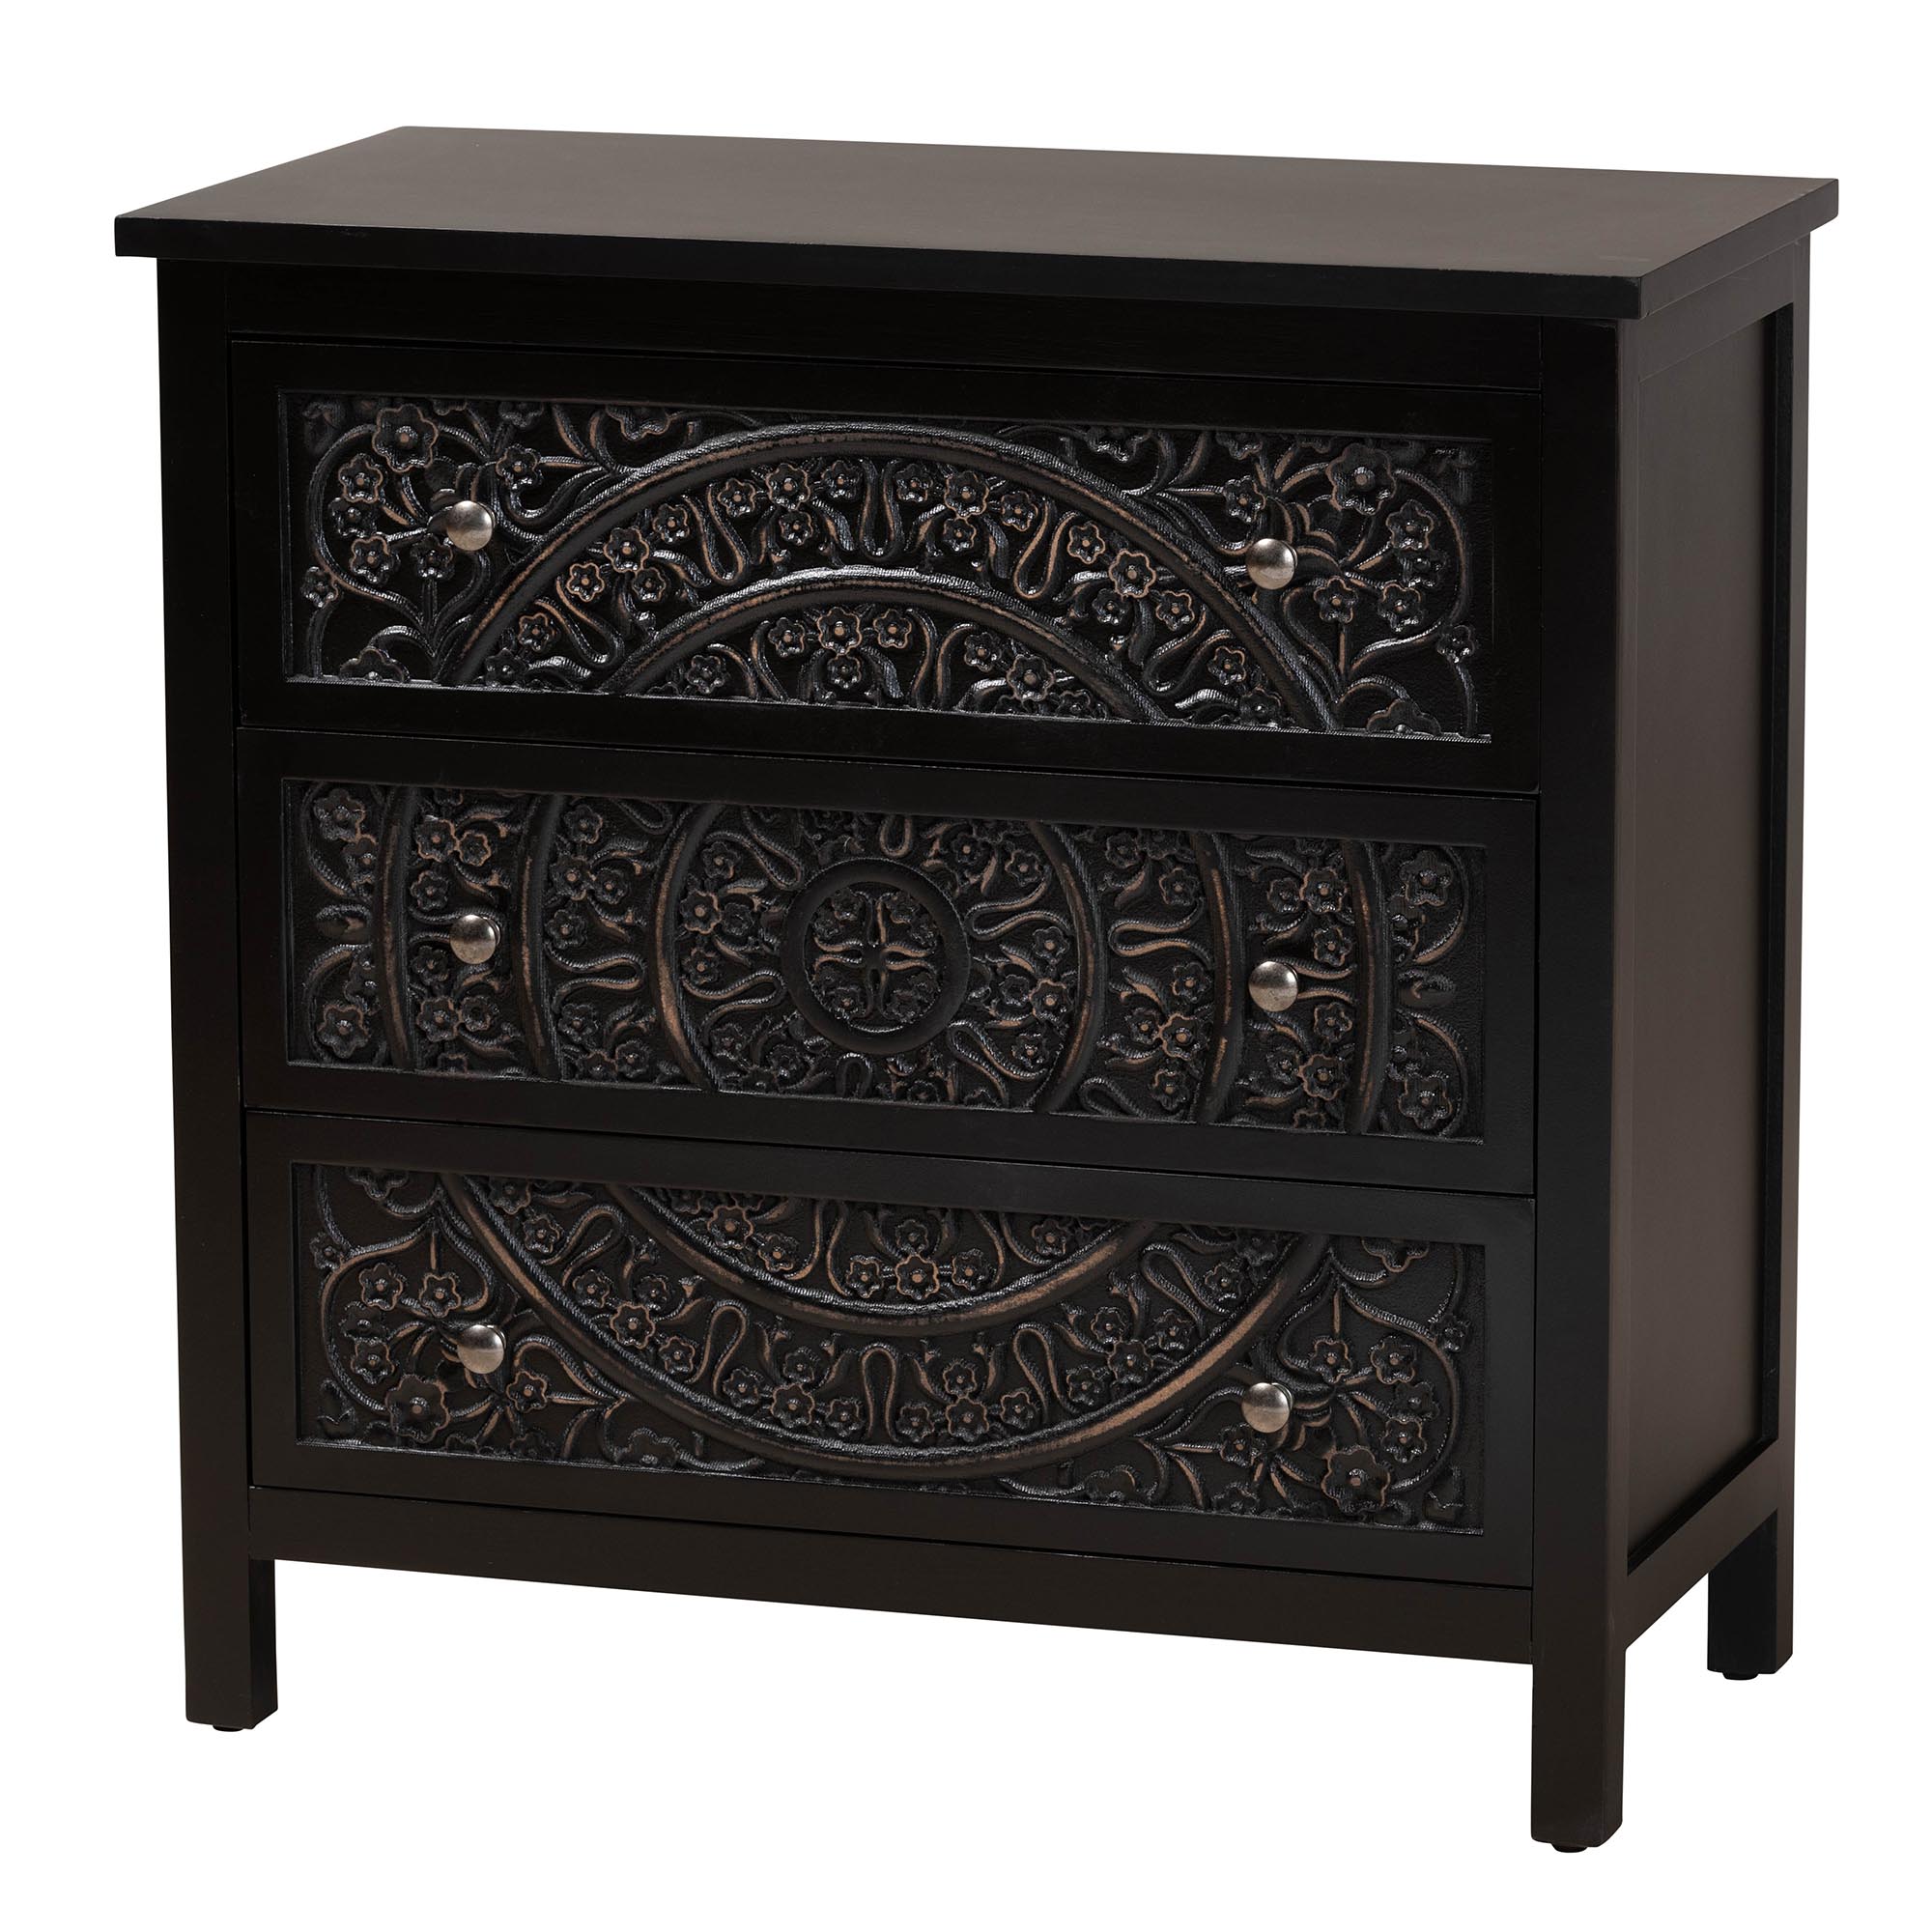 Baxton Studio Yelena Classic and Traditional Black Finished Wood 3-Drawer Storage Cabinet